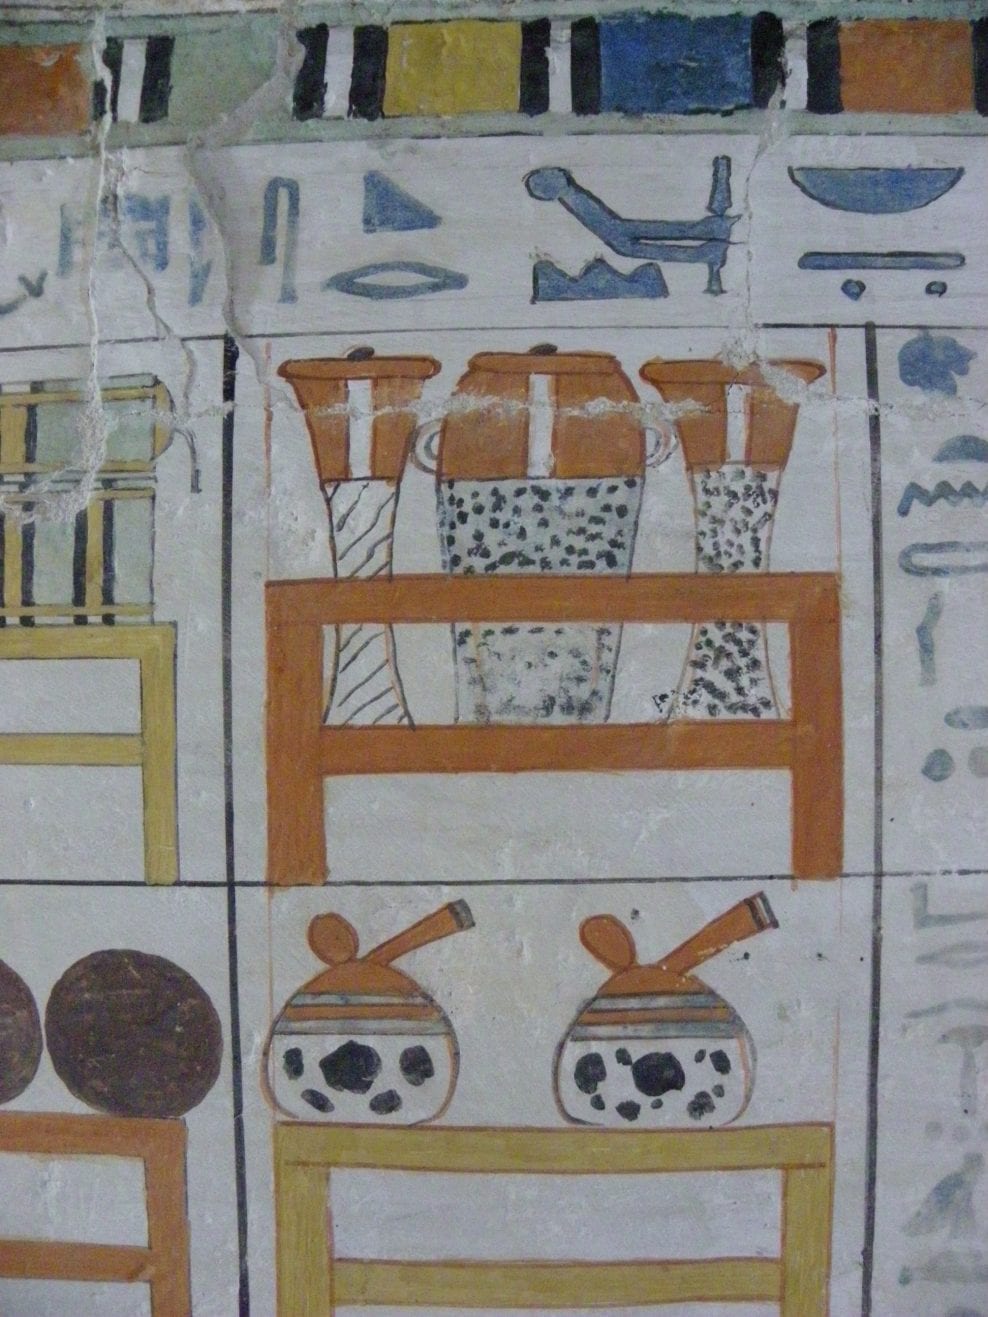 Tomb of Pepyankh, Sakkara, Egypt. Dated to the Old Kingdom.